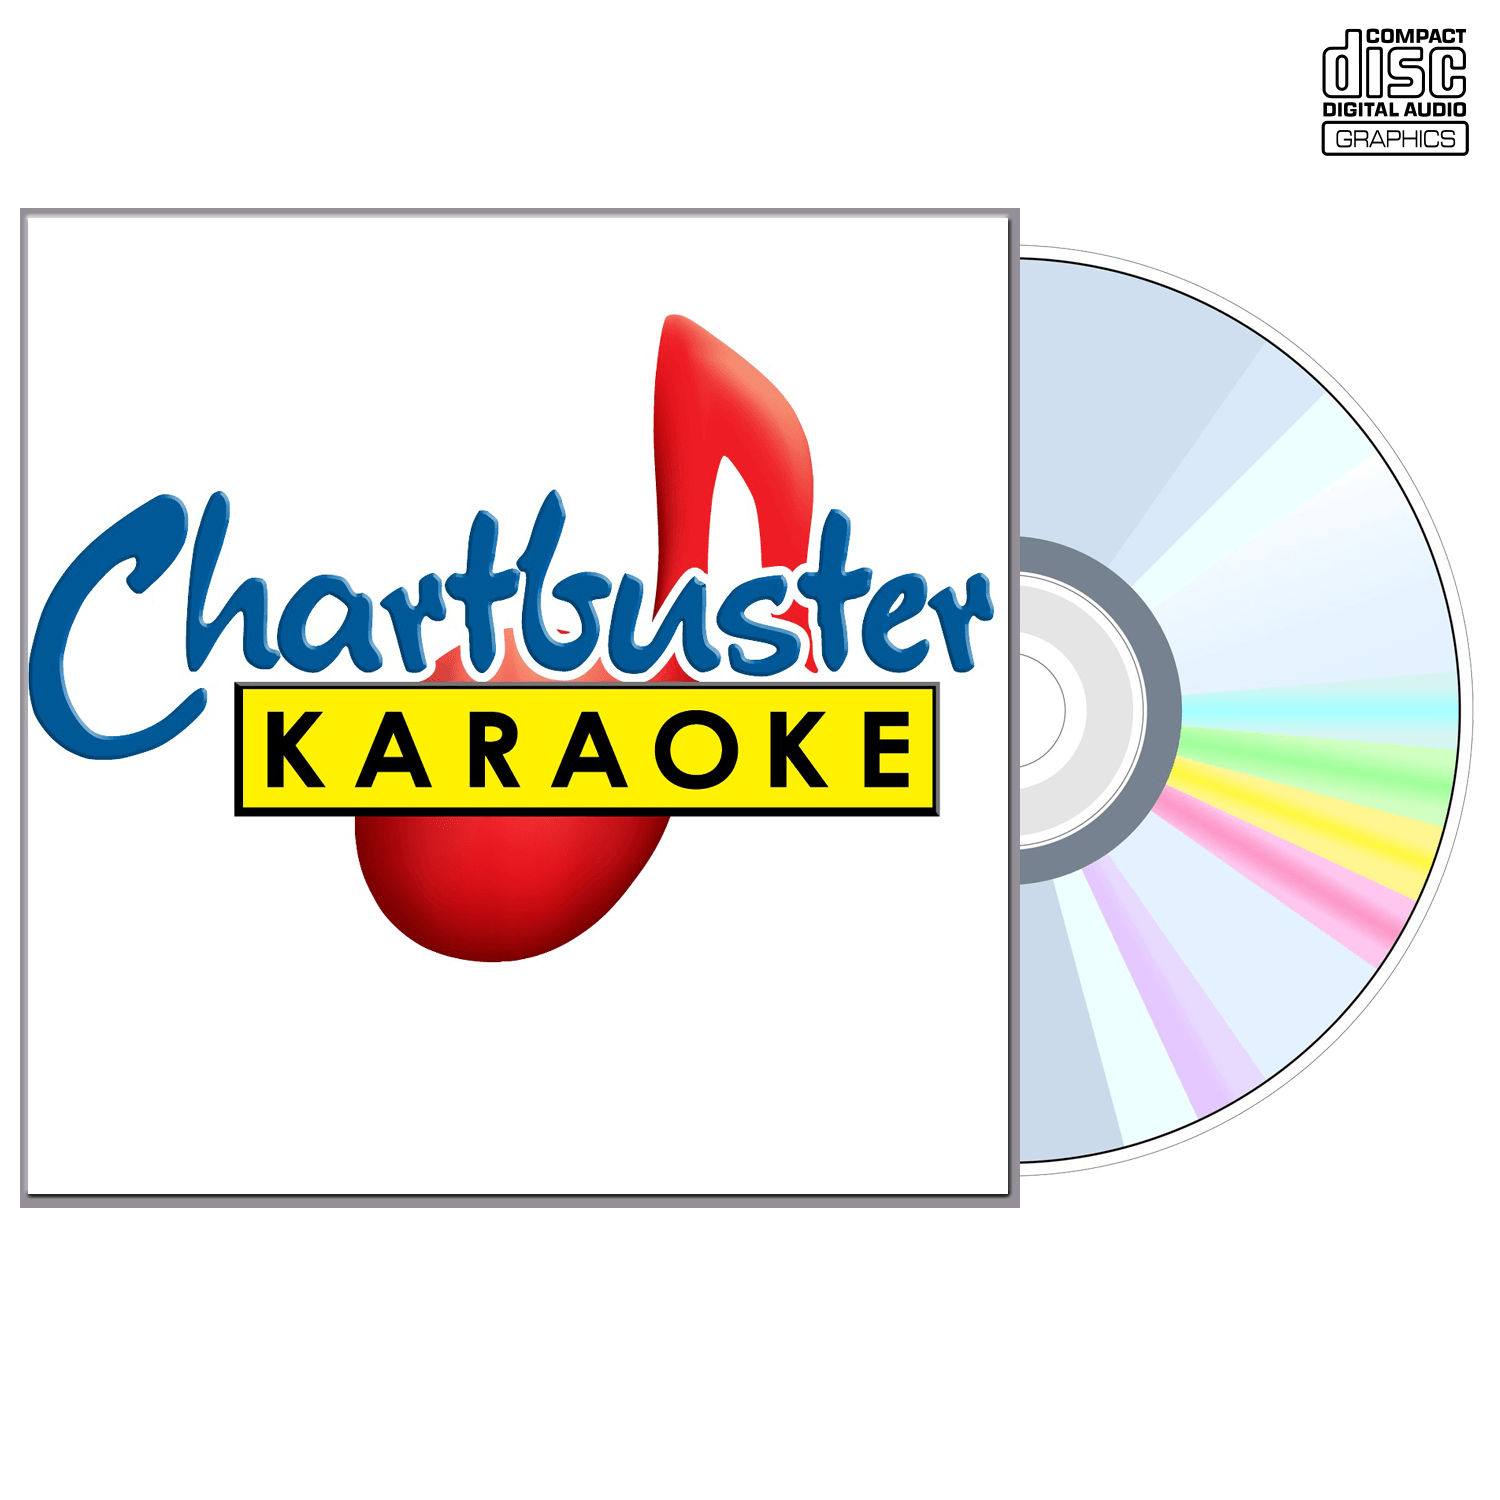 70's Collection Vol 17 - CD+G - Chartbuster Karaoke - Karaoke Home Entertainment